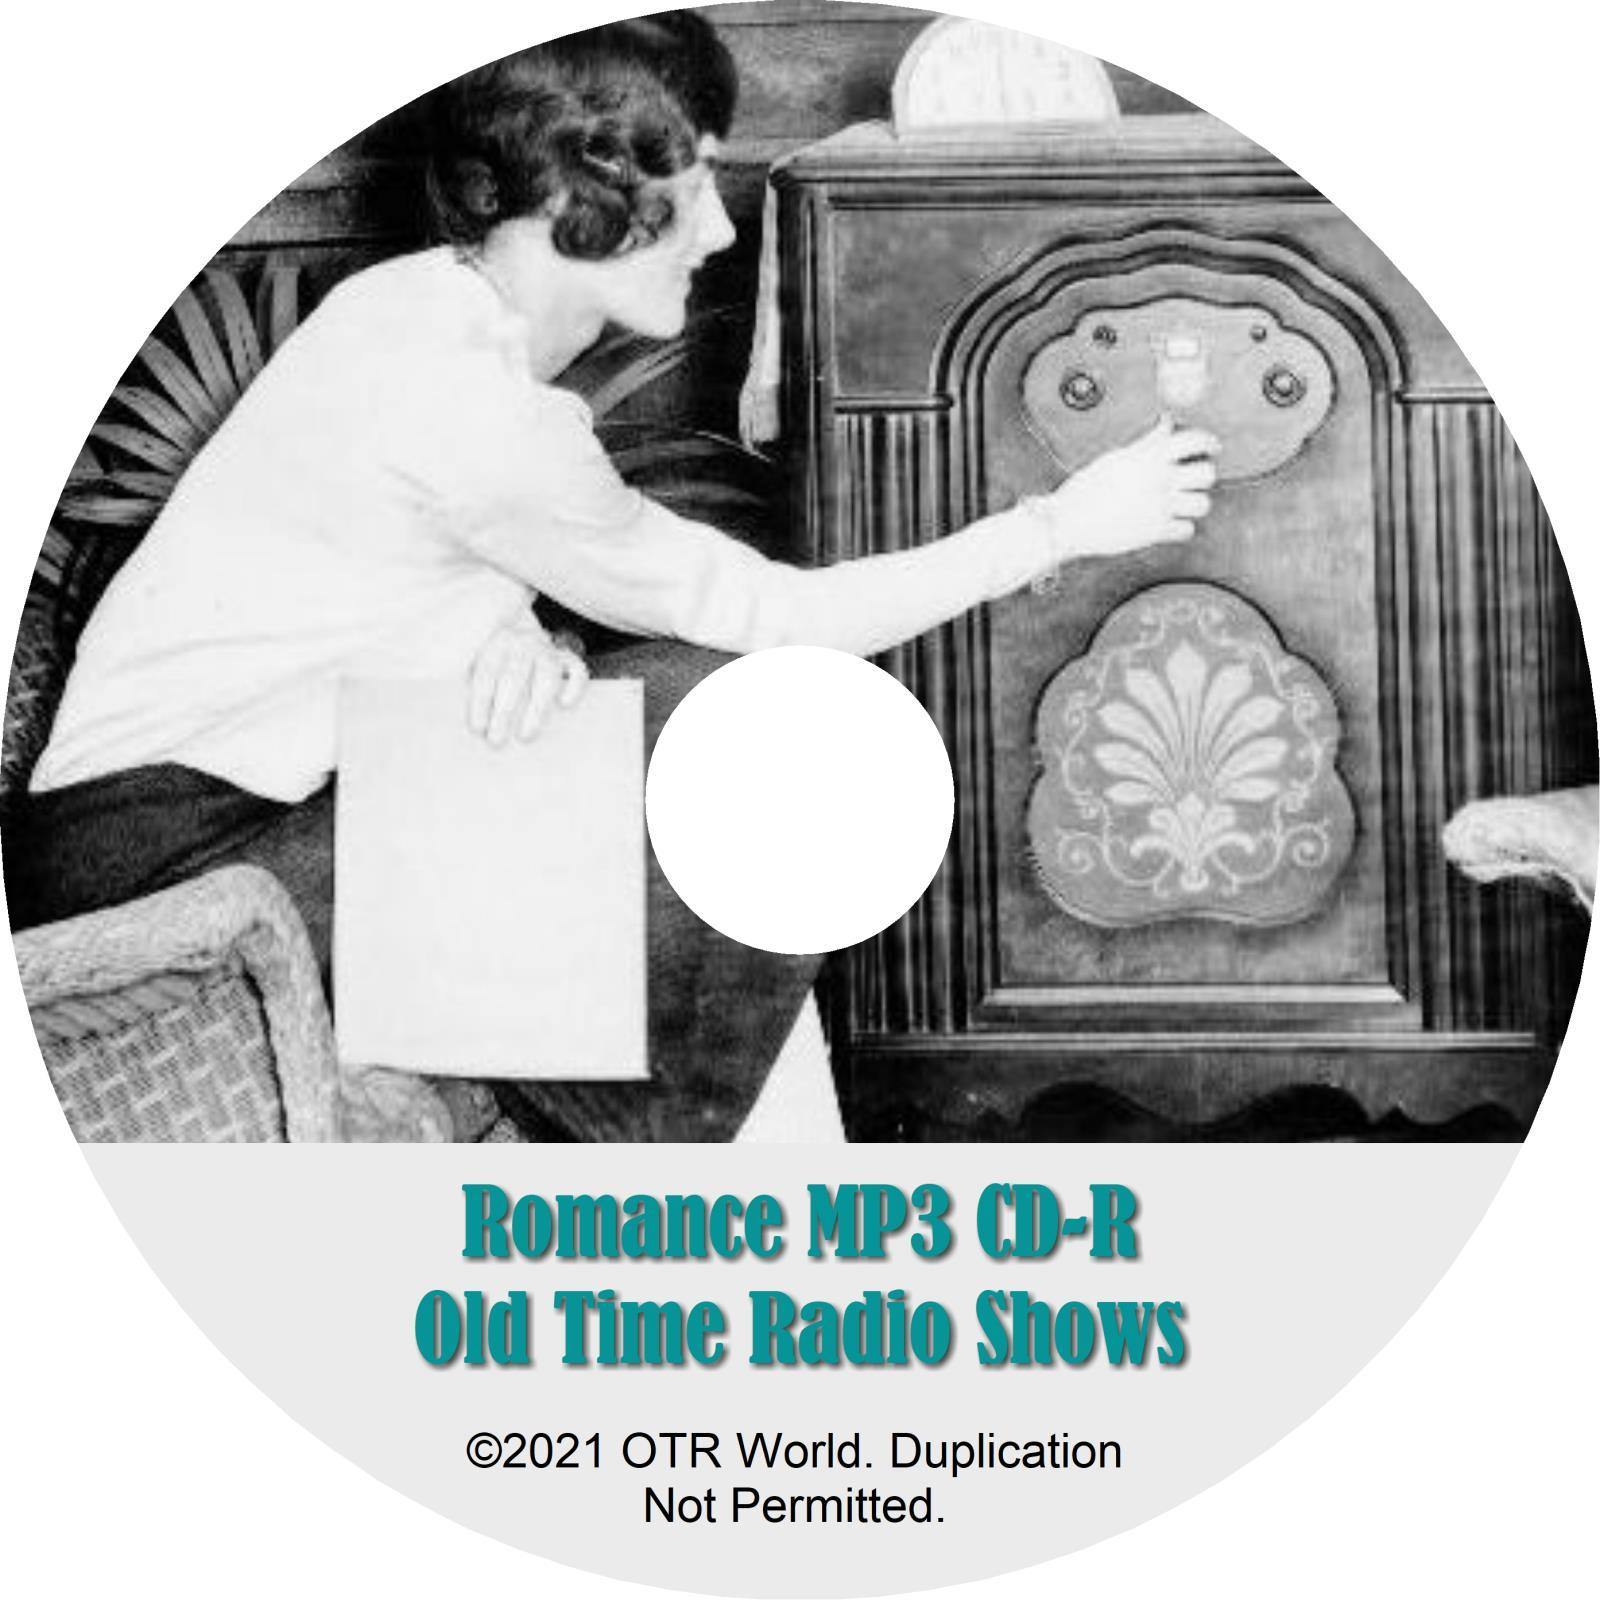 Romance OTR OTRS Old Time Radio Shows MP3 On DVD-R 207 Episode - OTR World